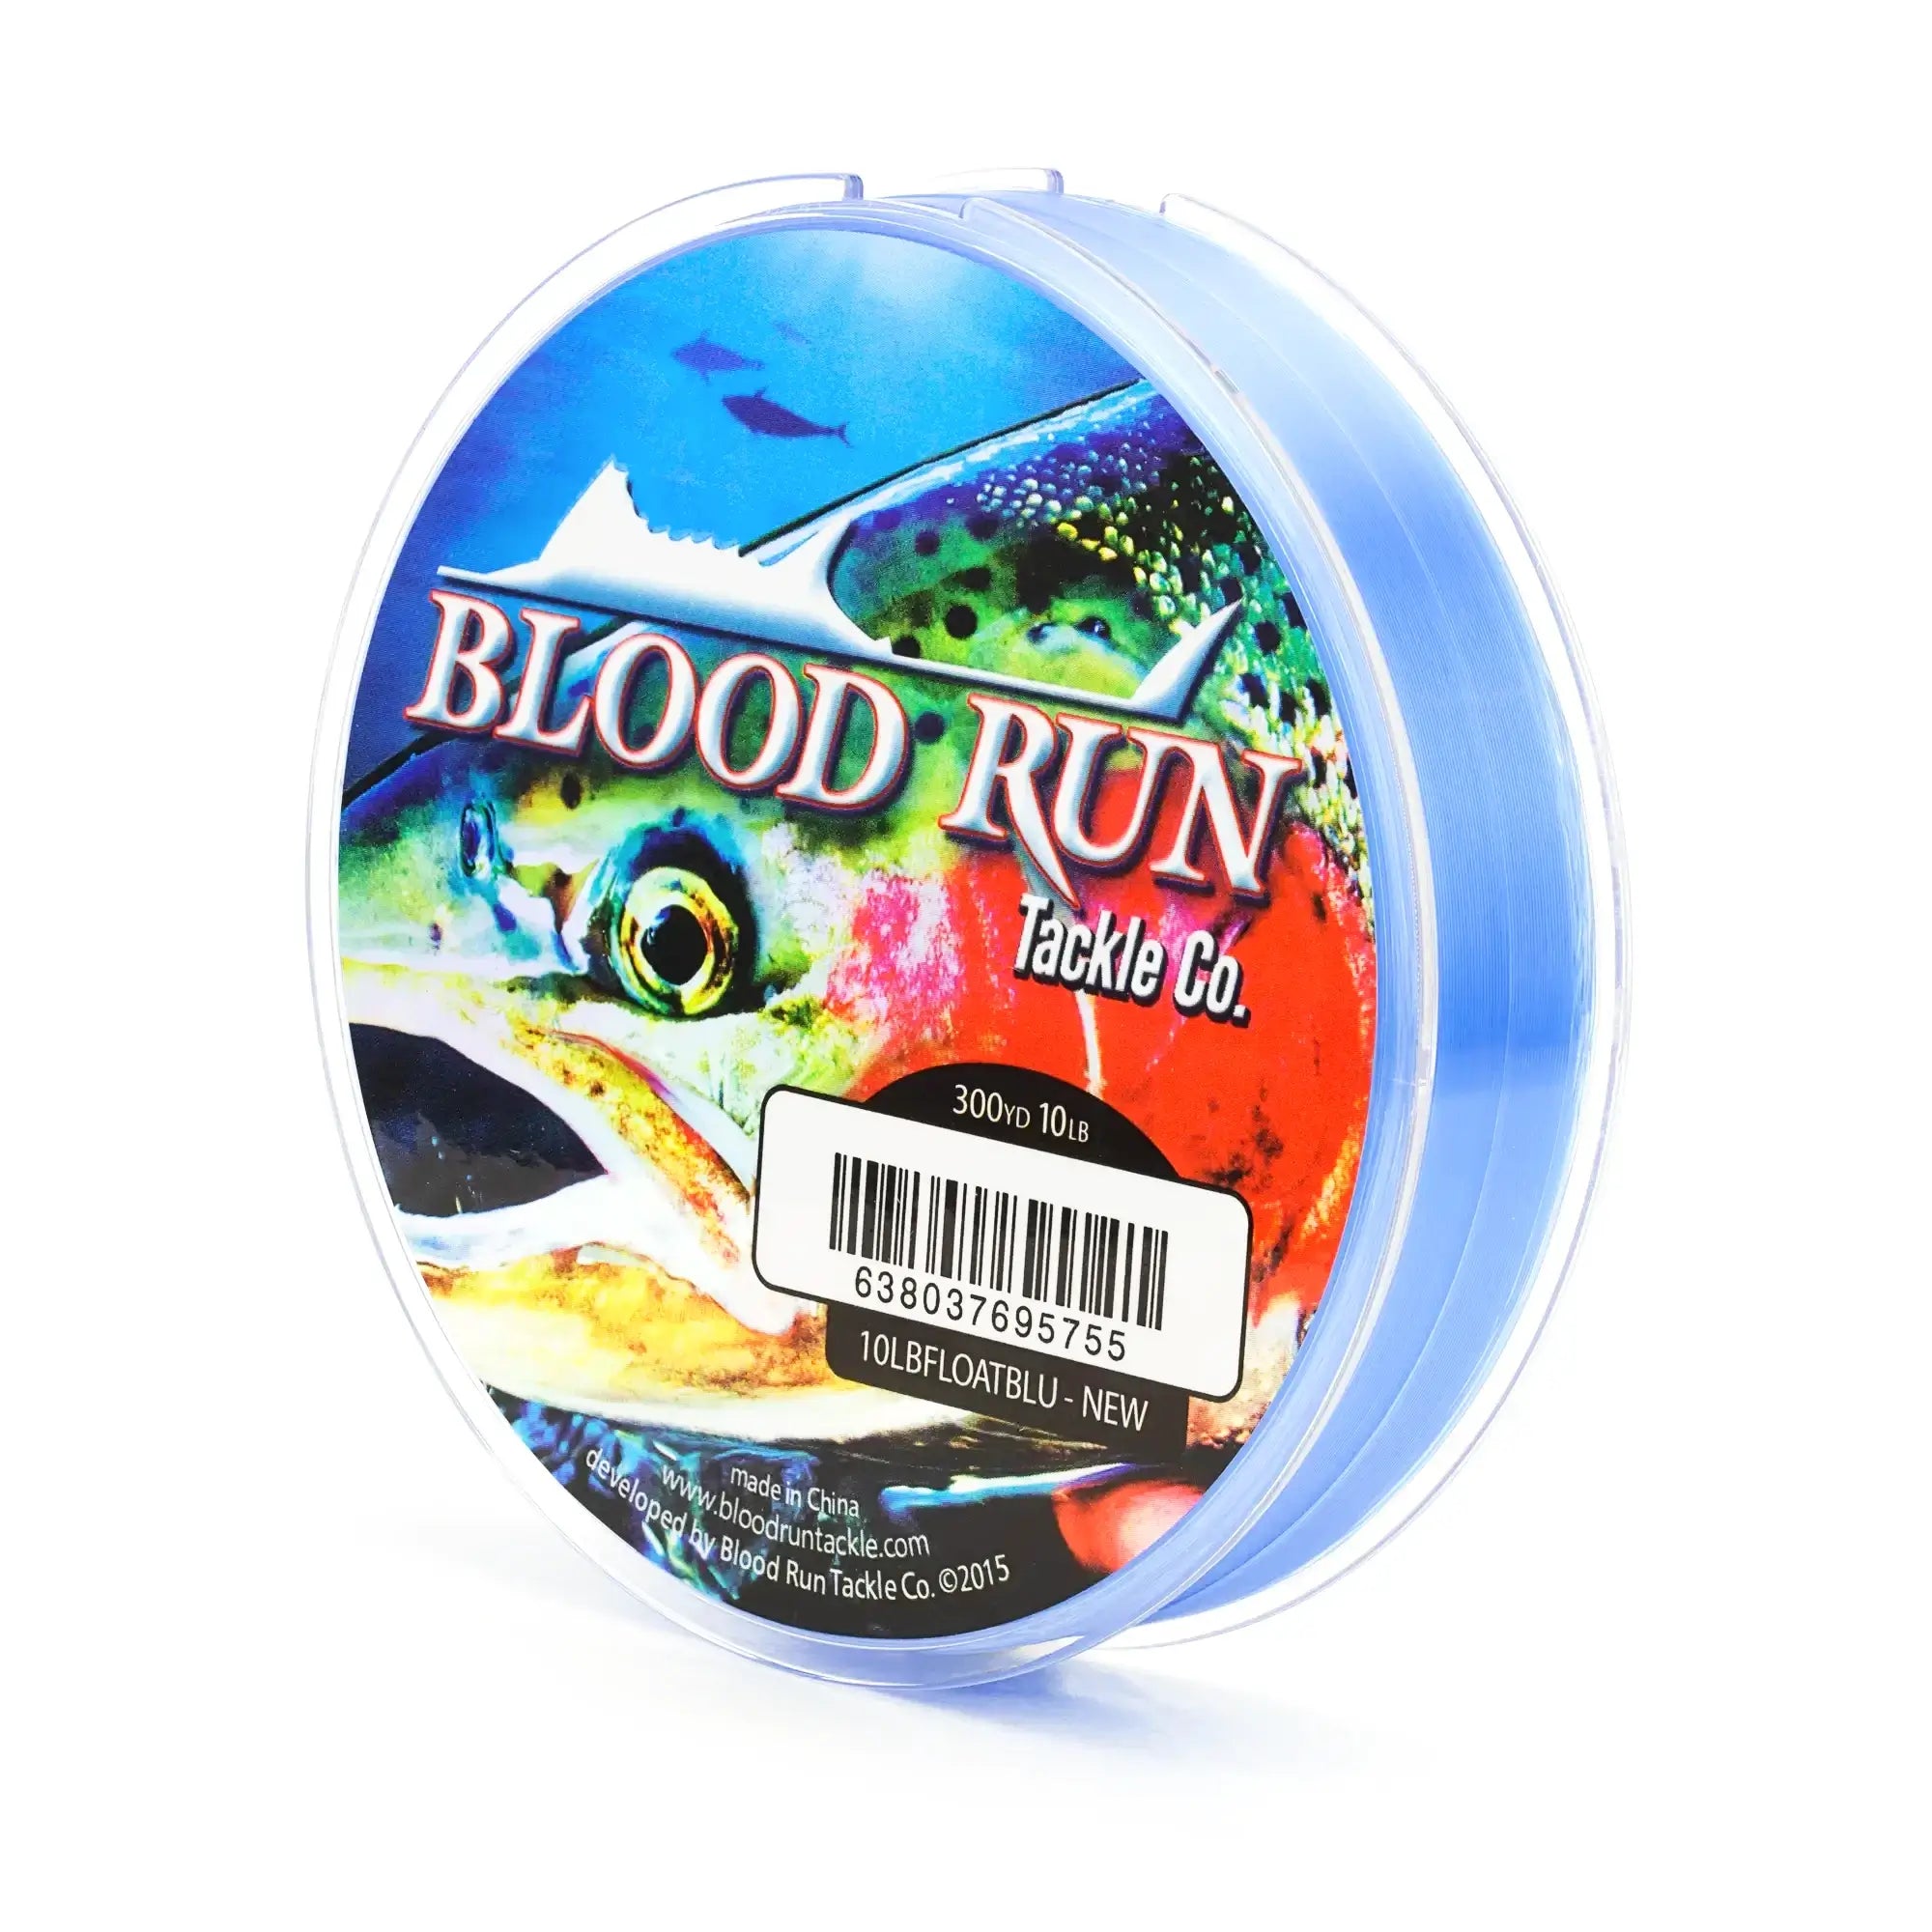 Blood Run Tackle Mico Lead Core Line - 27 LB. - 100 Yds.